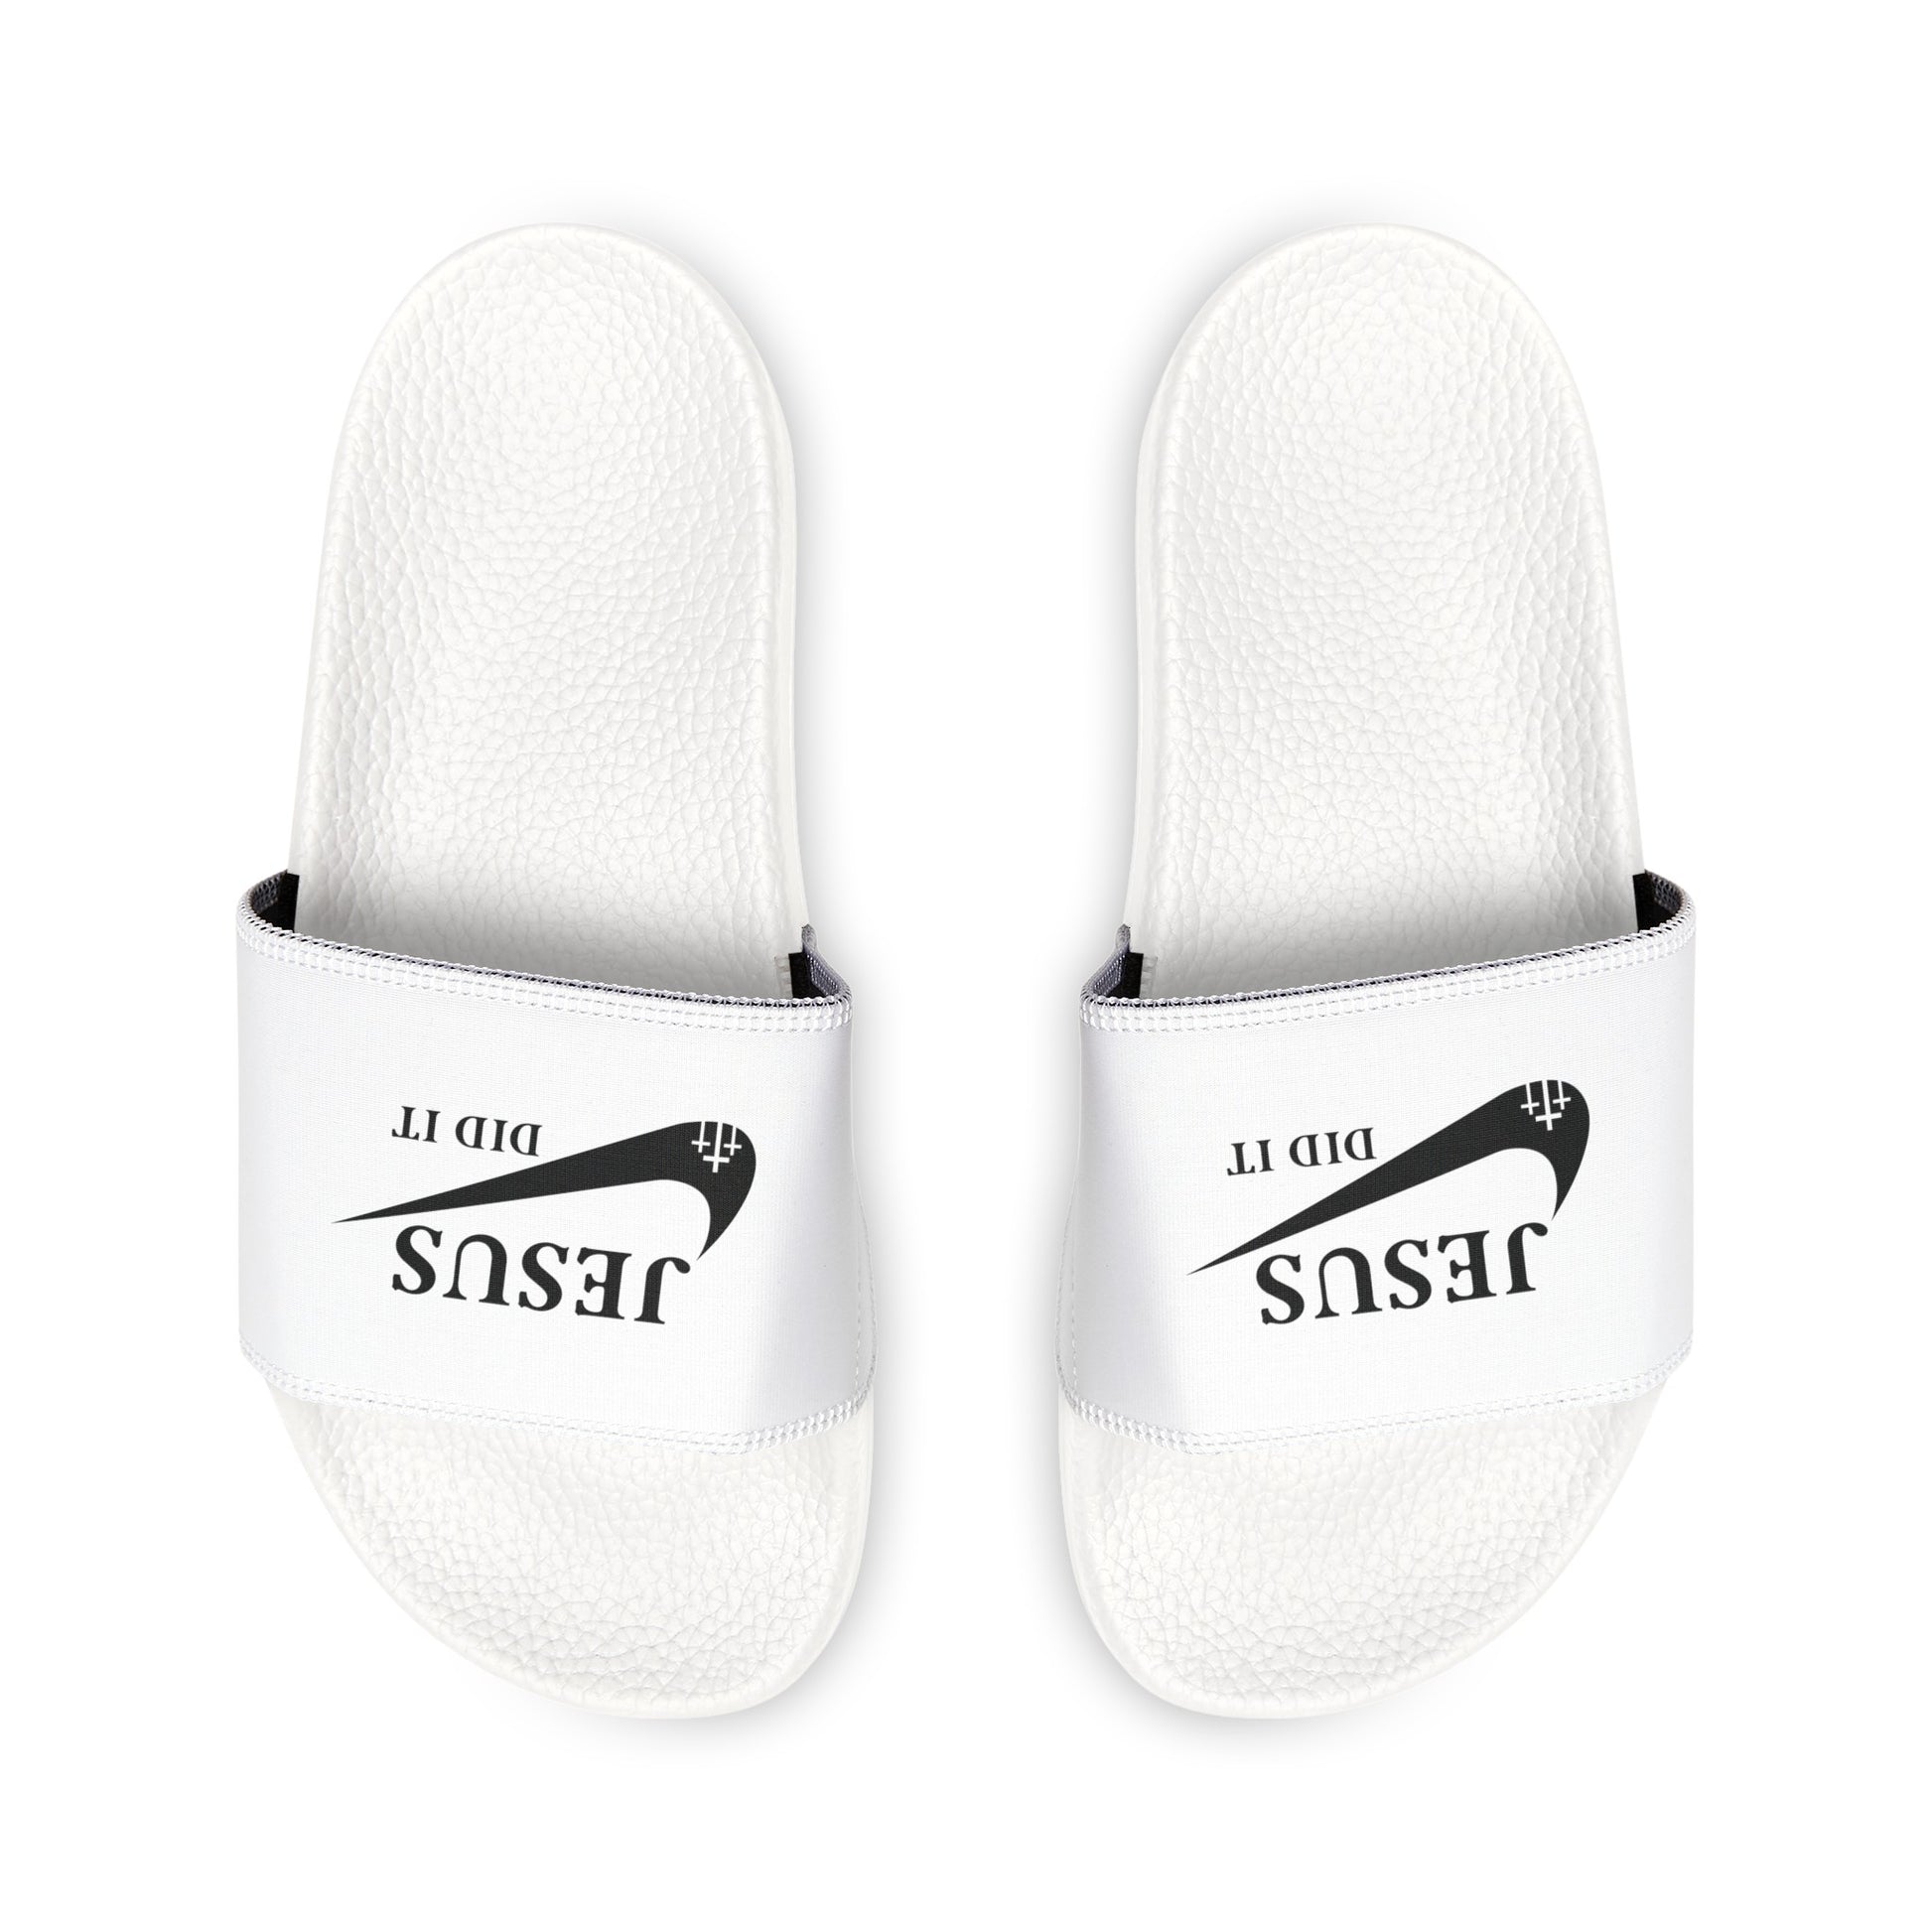 Jesus Did It (like Nike)  Men's PU Christian Slide Sandals Printify